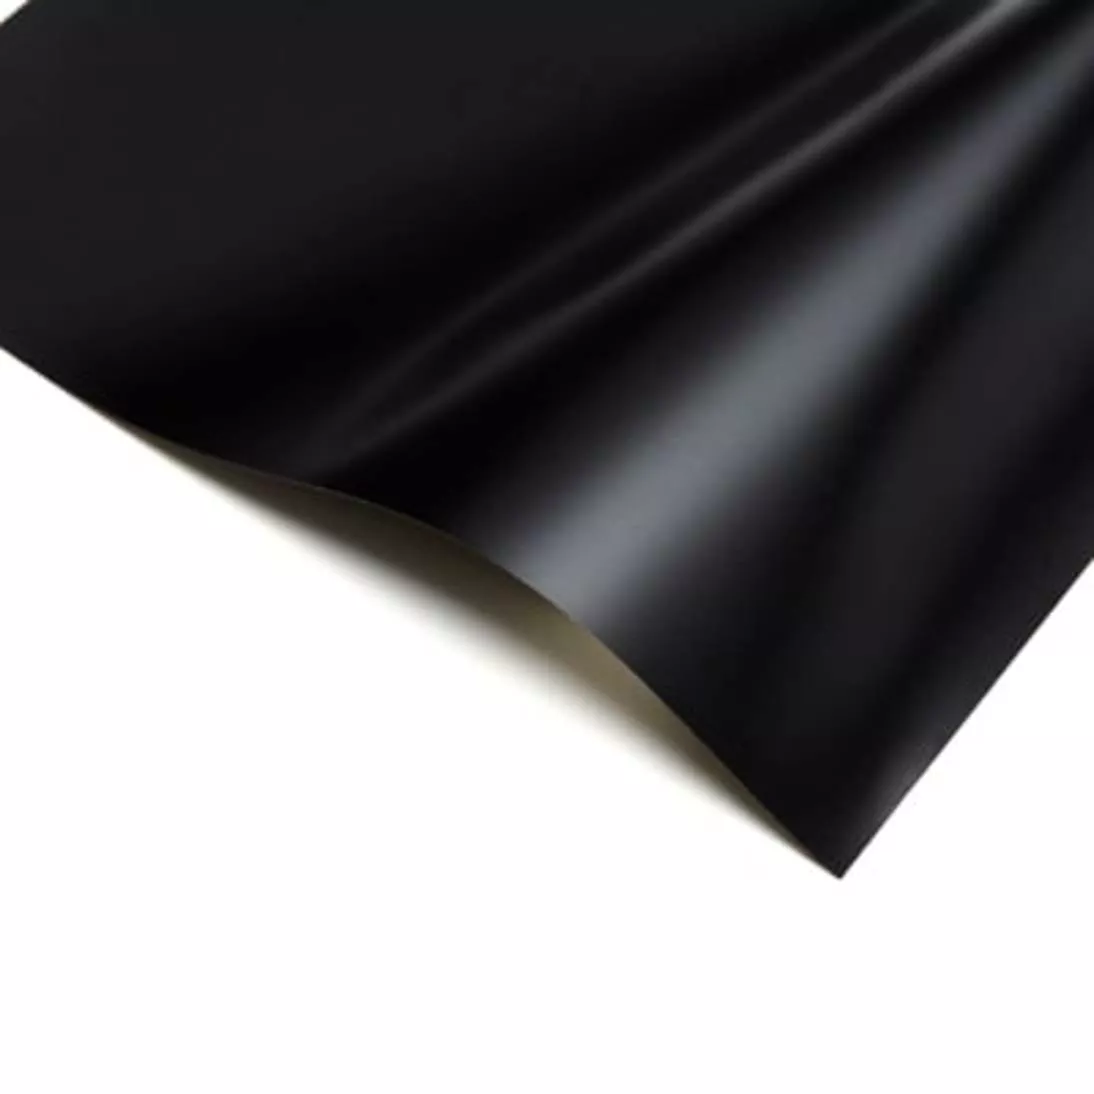 3M™ Plus Flexible Reflective Film Front Bumper Stripe 680-85, Black,
Sbpag-50, 2 in x 104 in